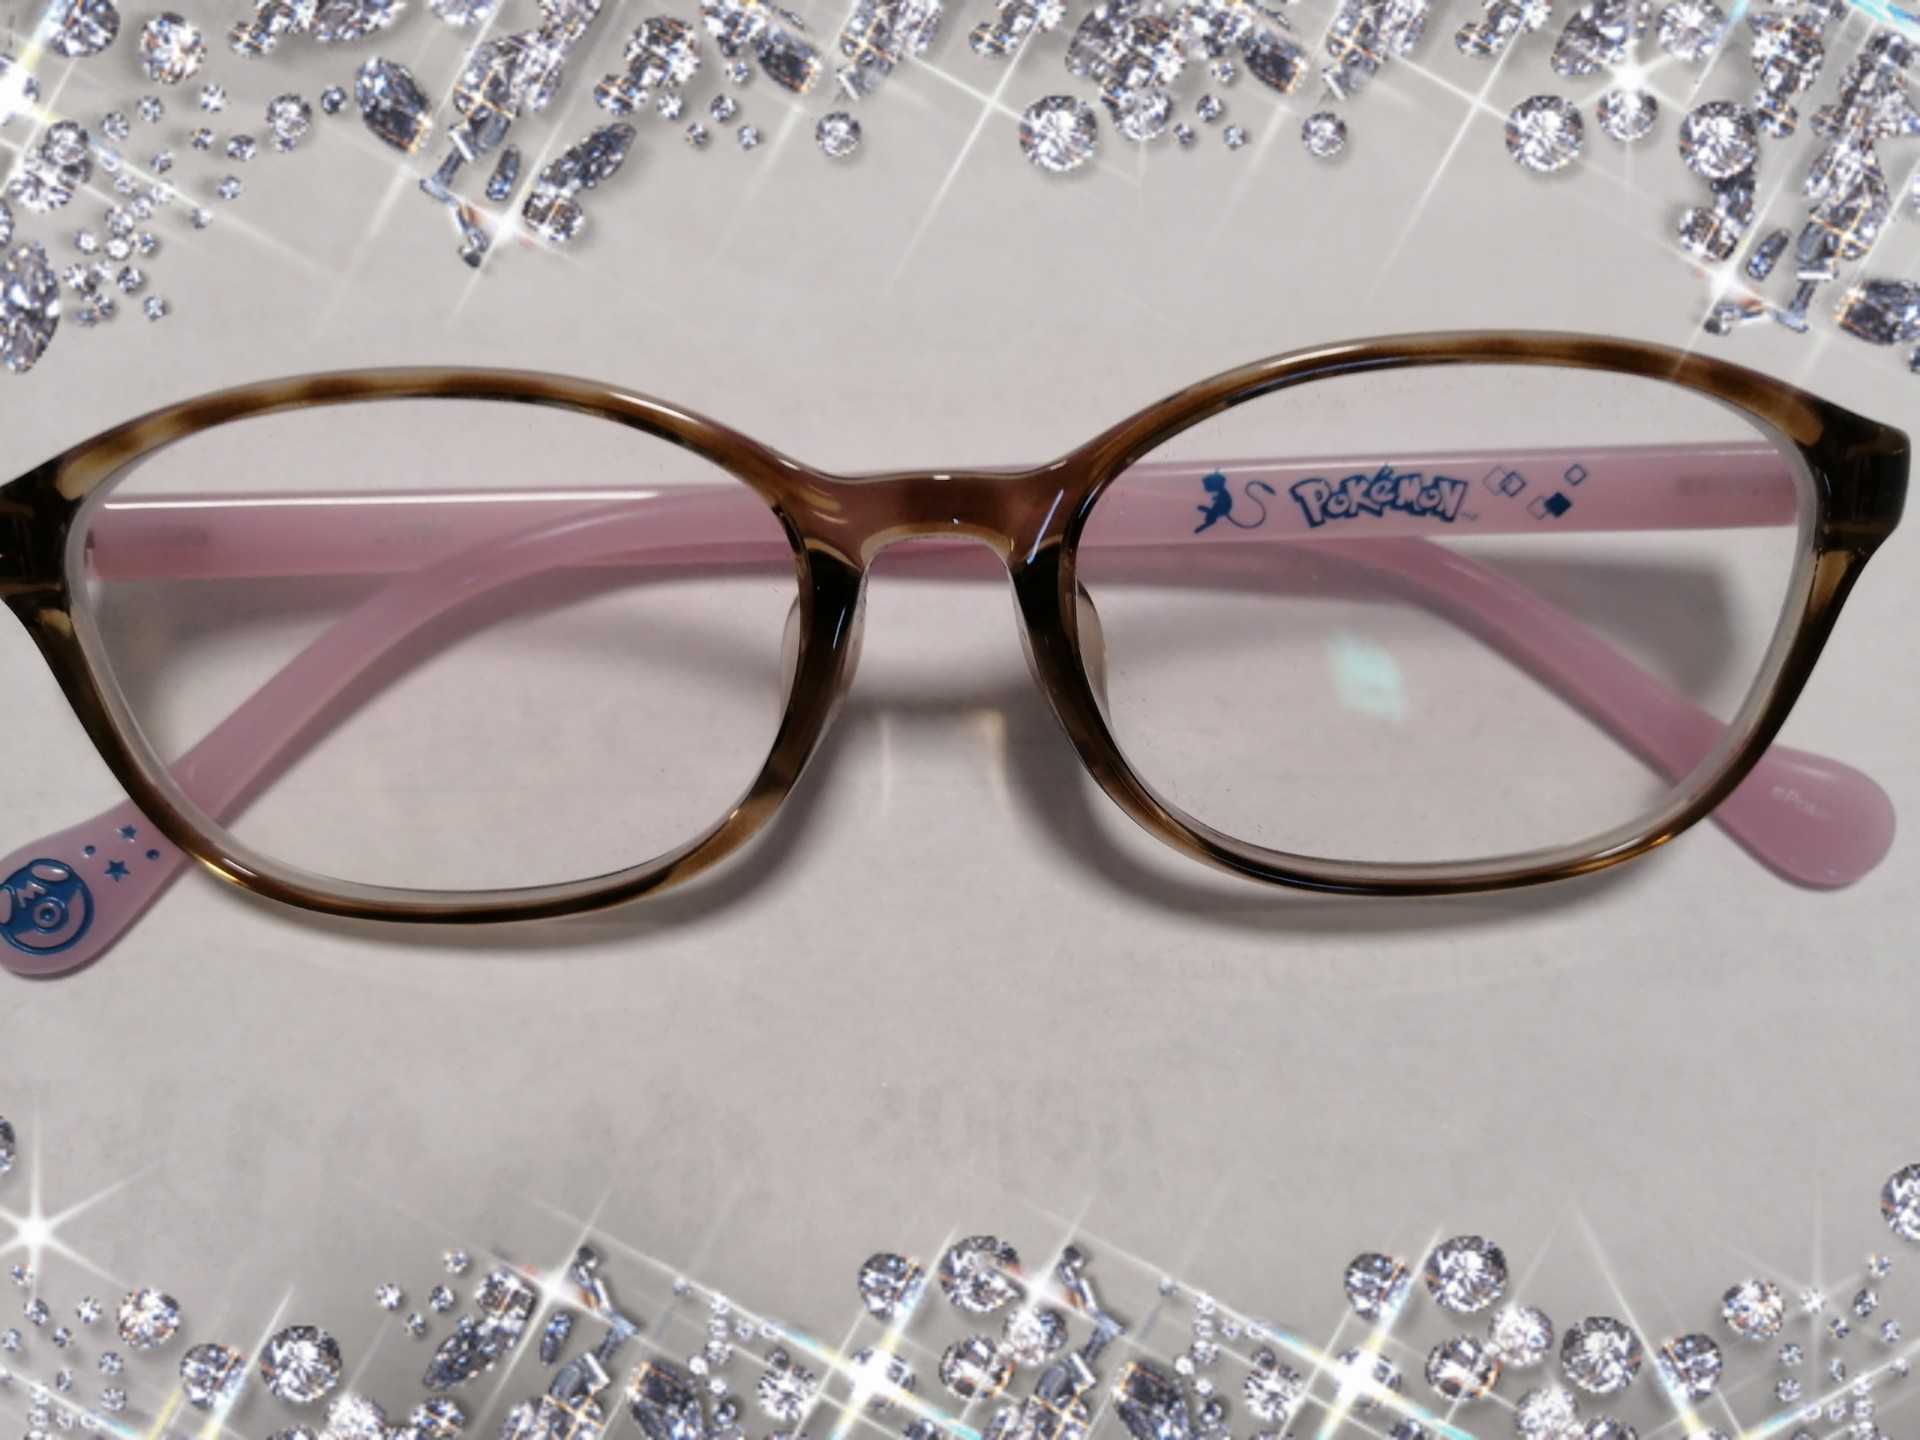 Jins ポケモンのメガネ買いました みるかのお買い物 楽天ブログ